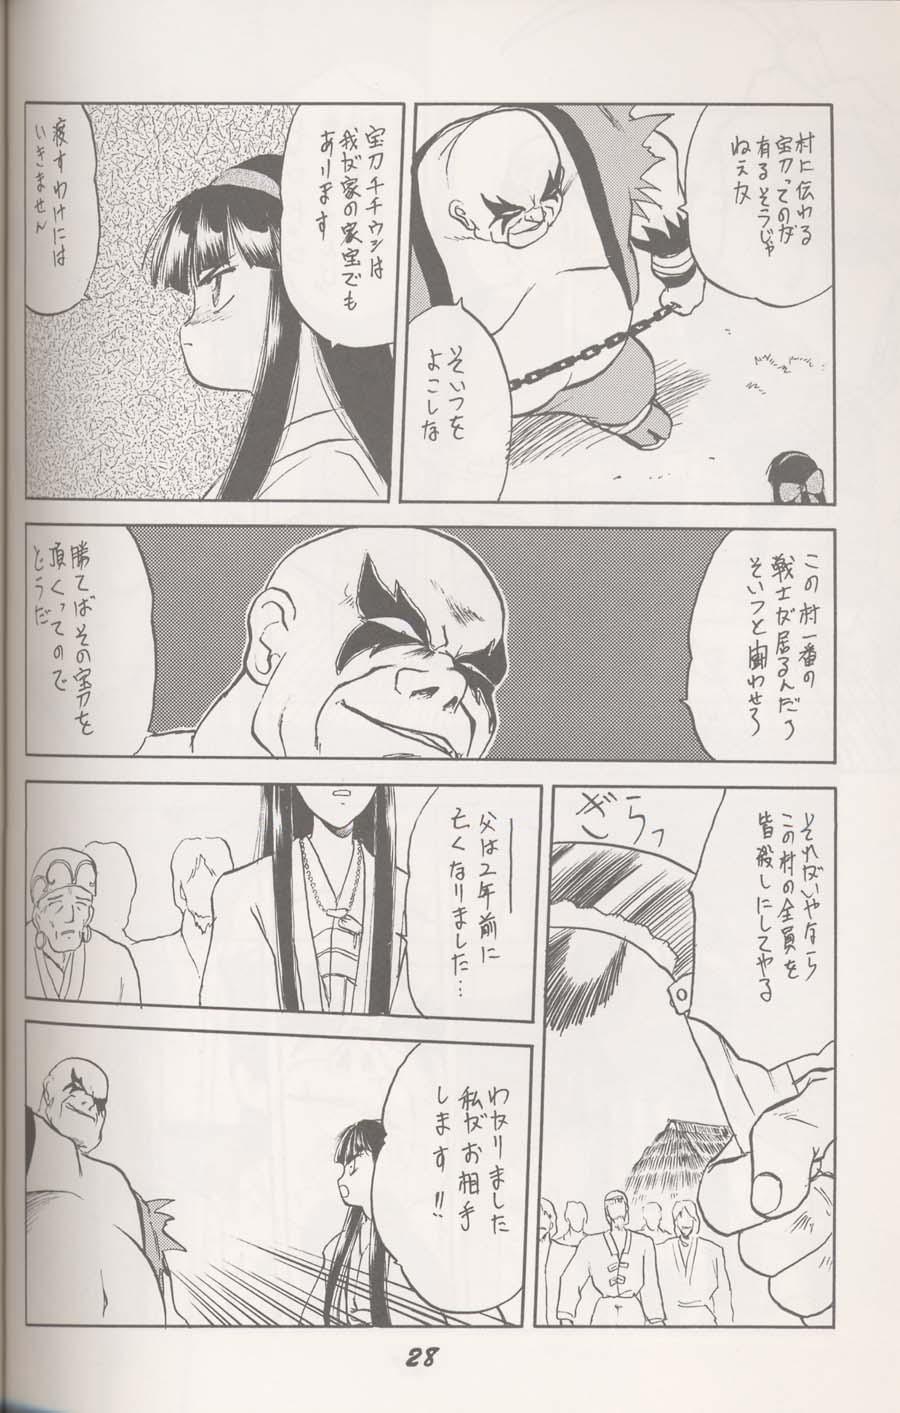 Hot Women Having Sex ヌプル メノコ ナコルル - Samurai spirits Hunks - Page 3